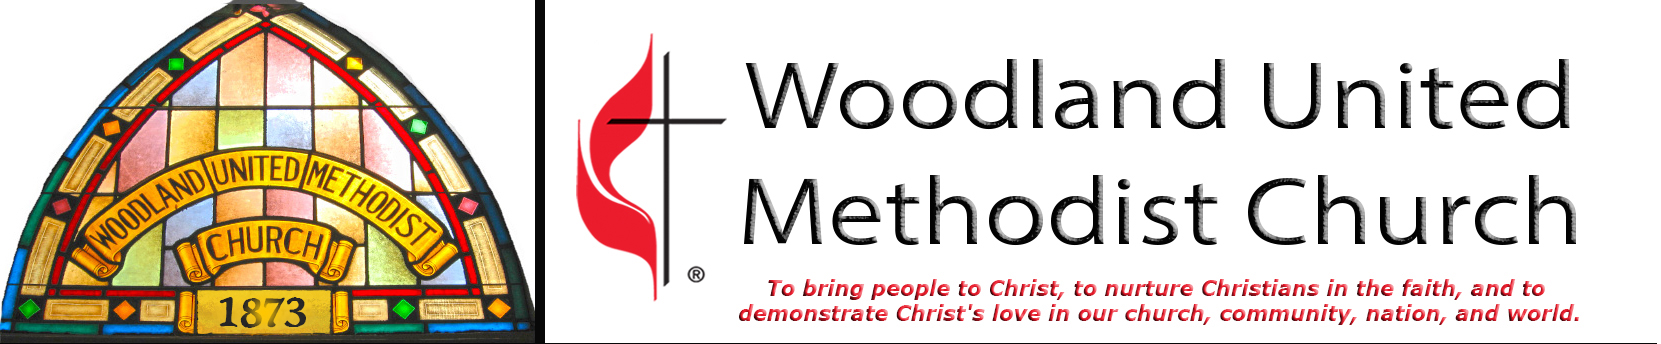 Woodland United Methodist Church Banner